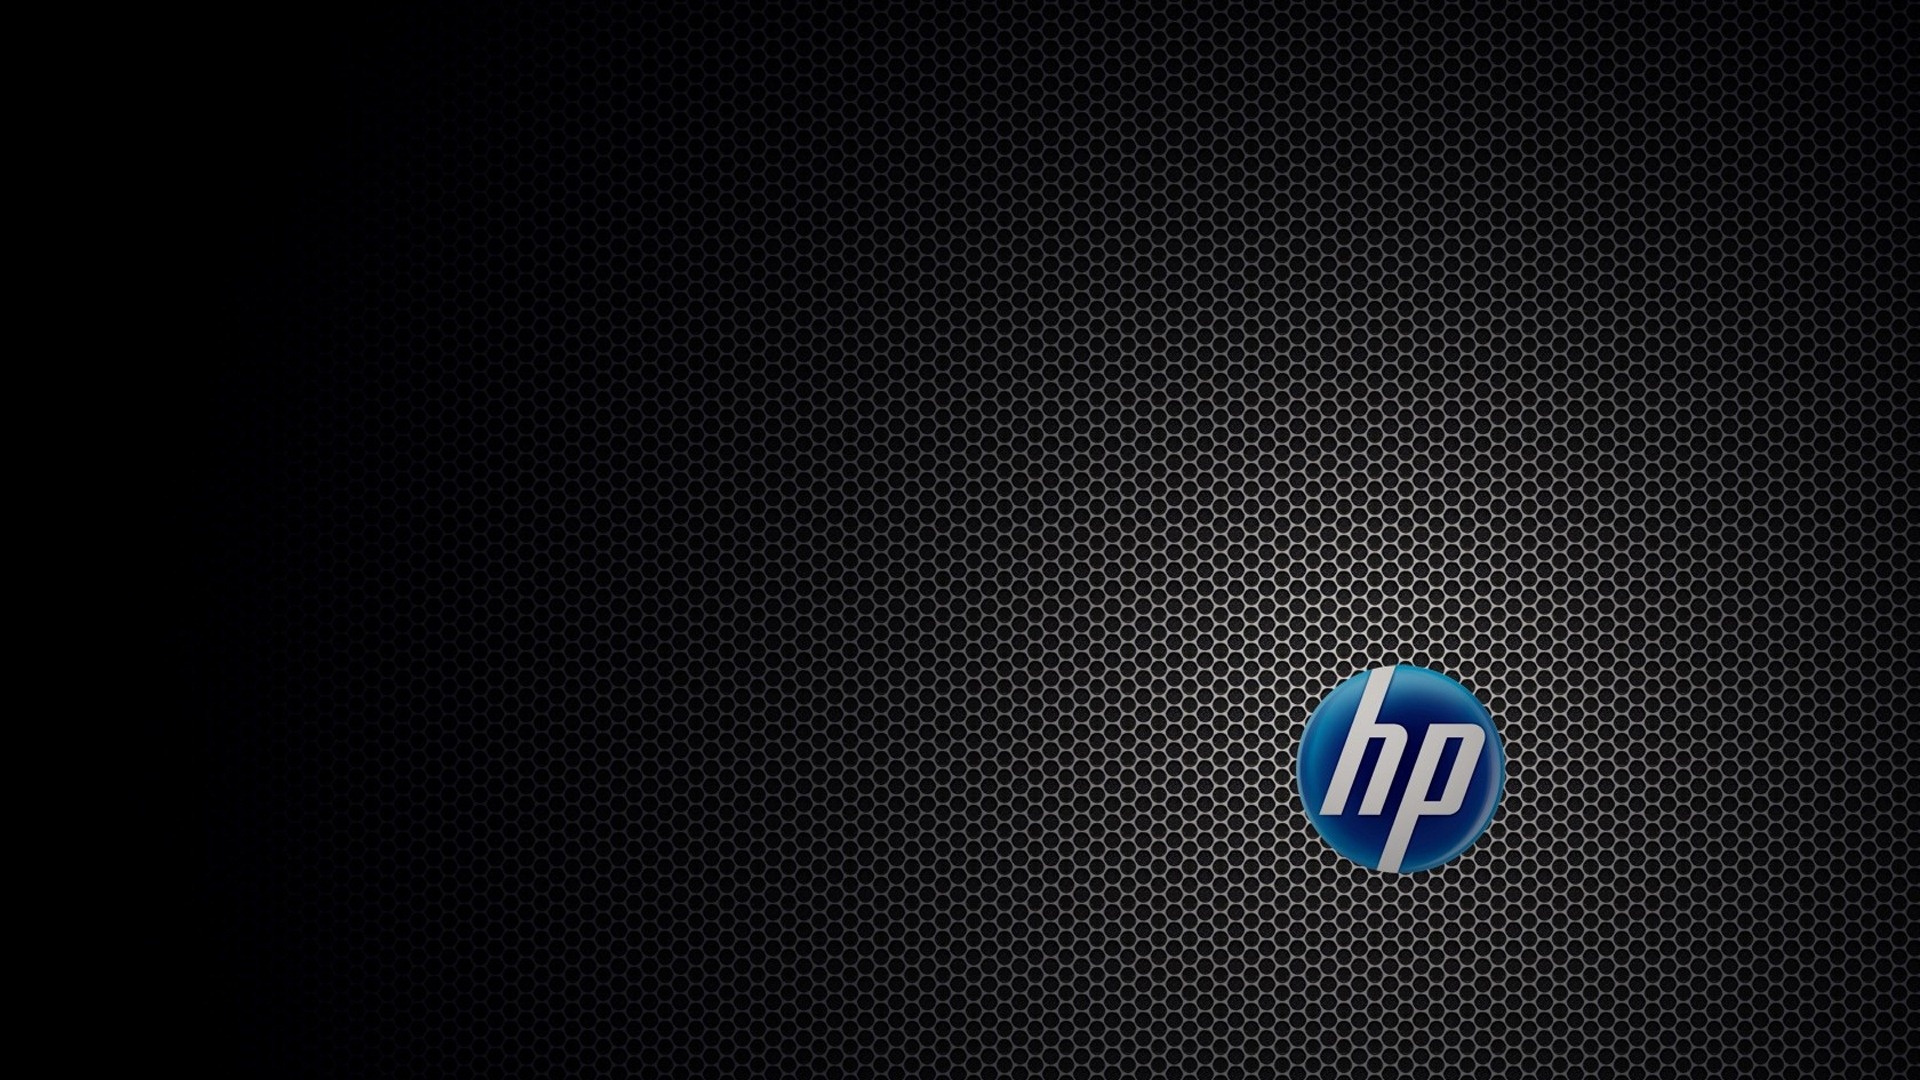 HP, 4K wallpapers, High-performance computing, Cutting-edge technology, 1920x1080 Full HD Desktop